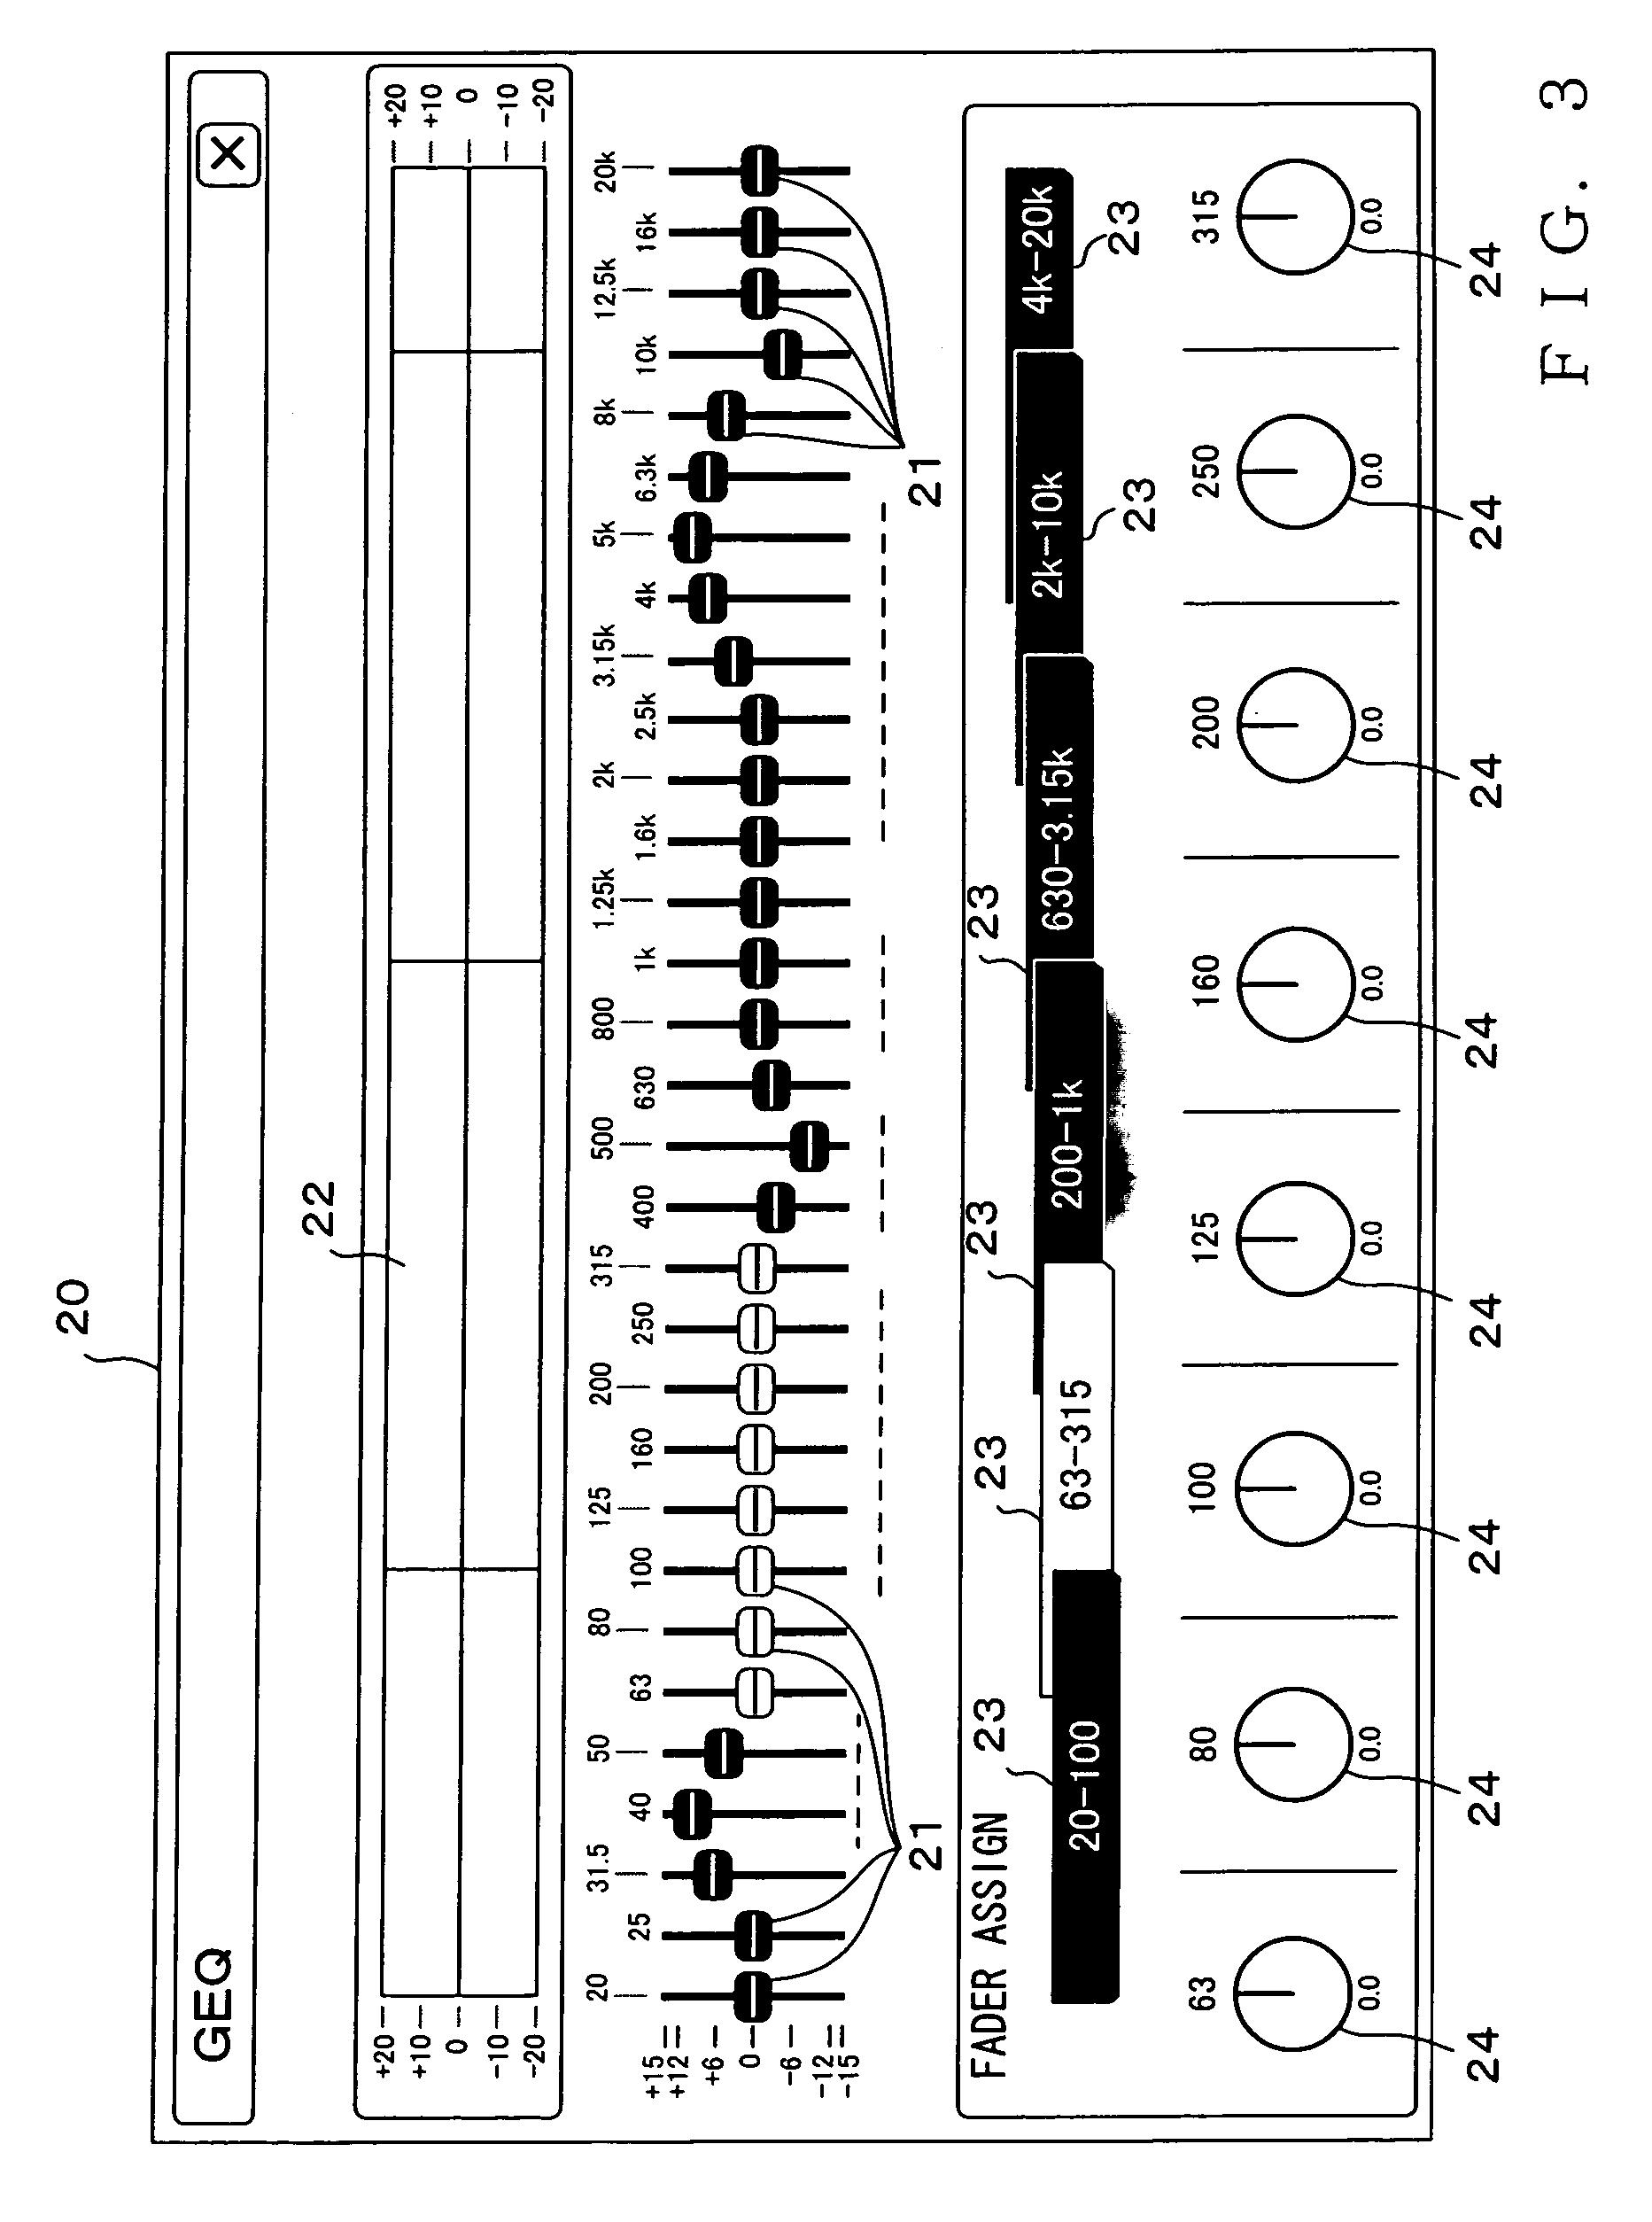 Parameter setting apparatus and method for audio mixer